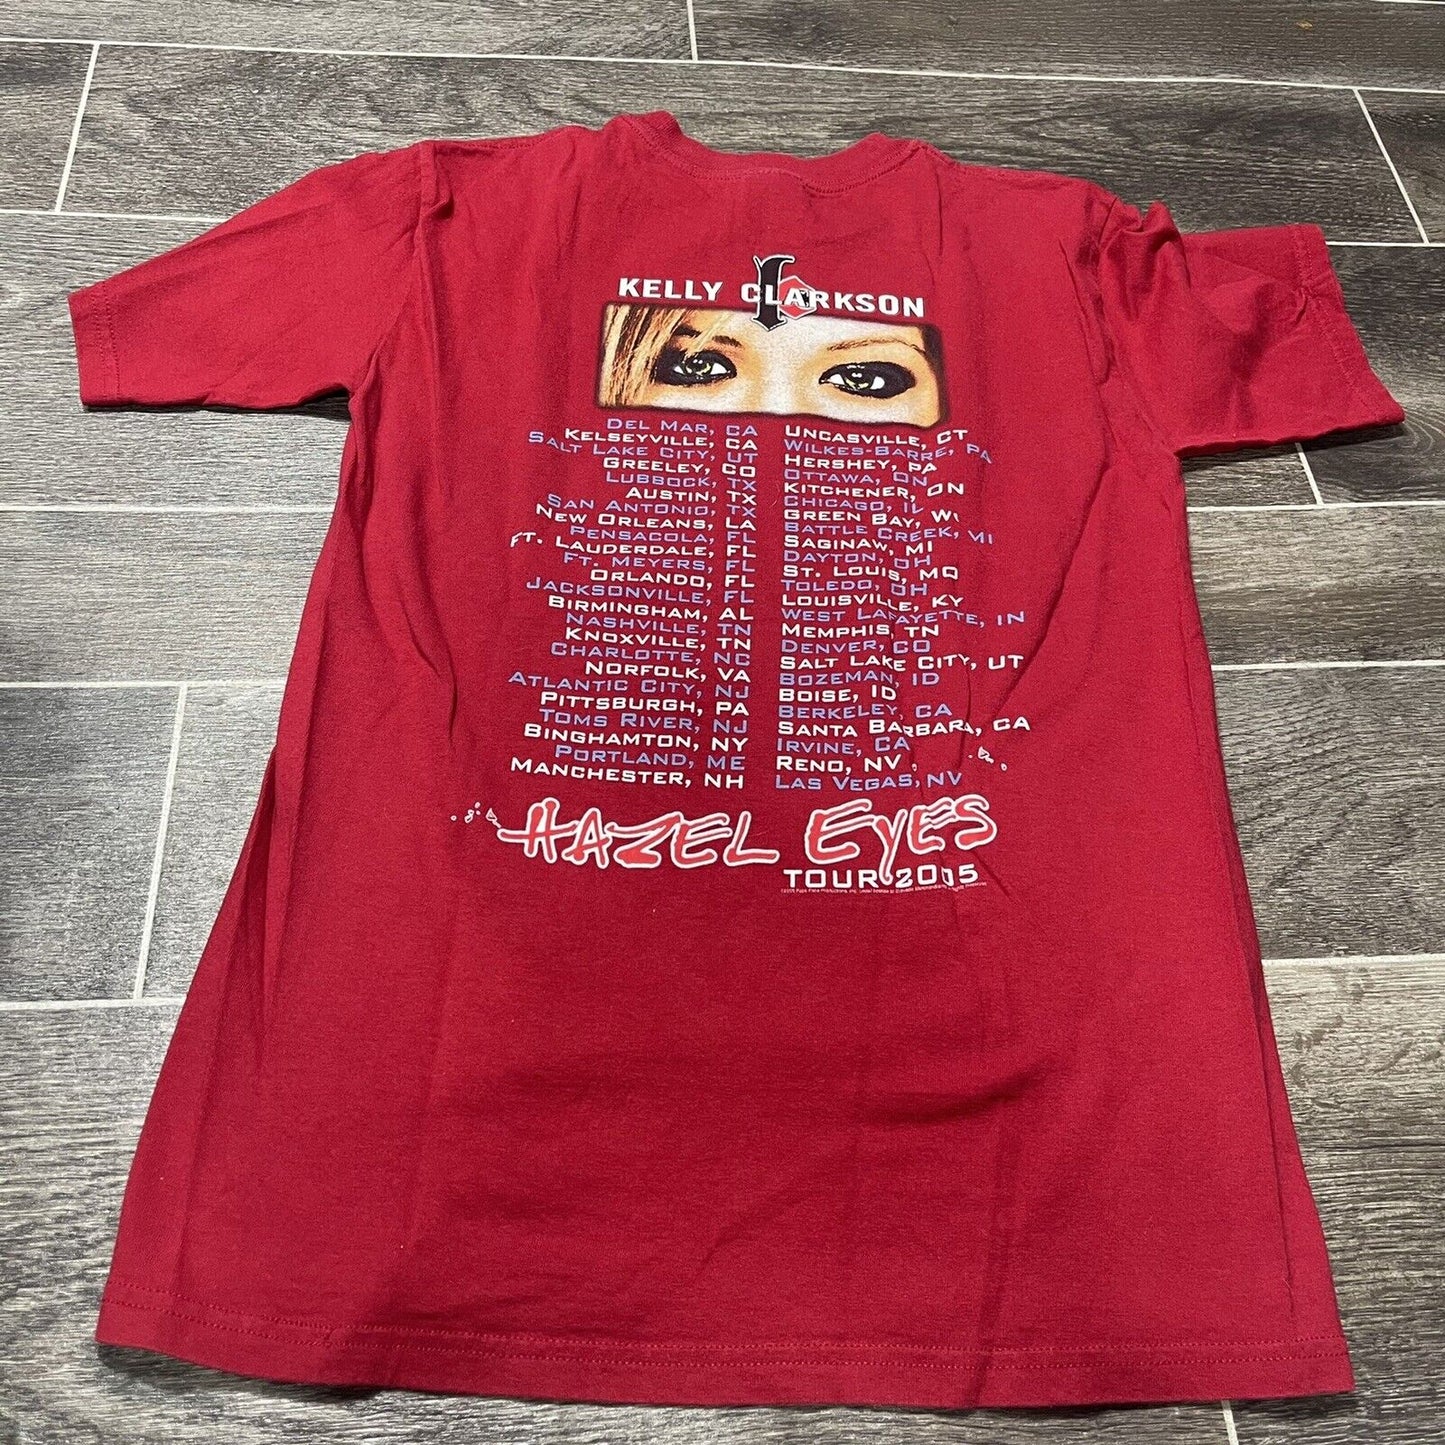 Kelly Clarkson Tee - American Idol 2005 Hazel Eyes Concert Tour T Shirt Small